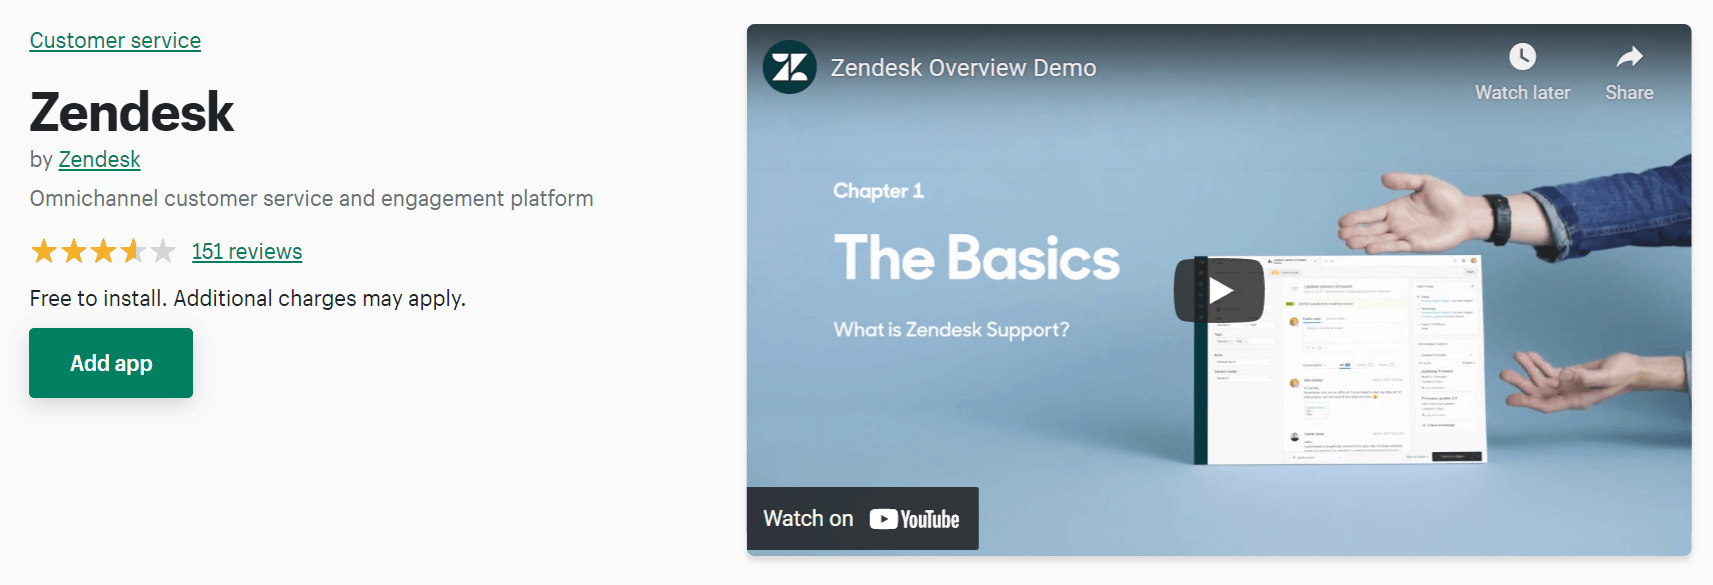 Application de support client Zendesk